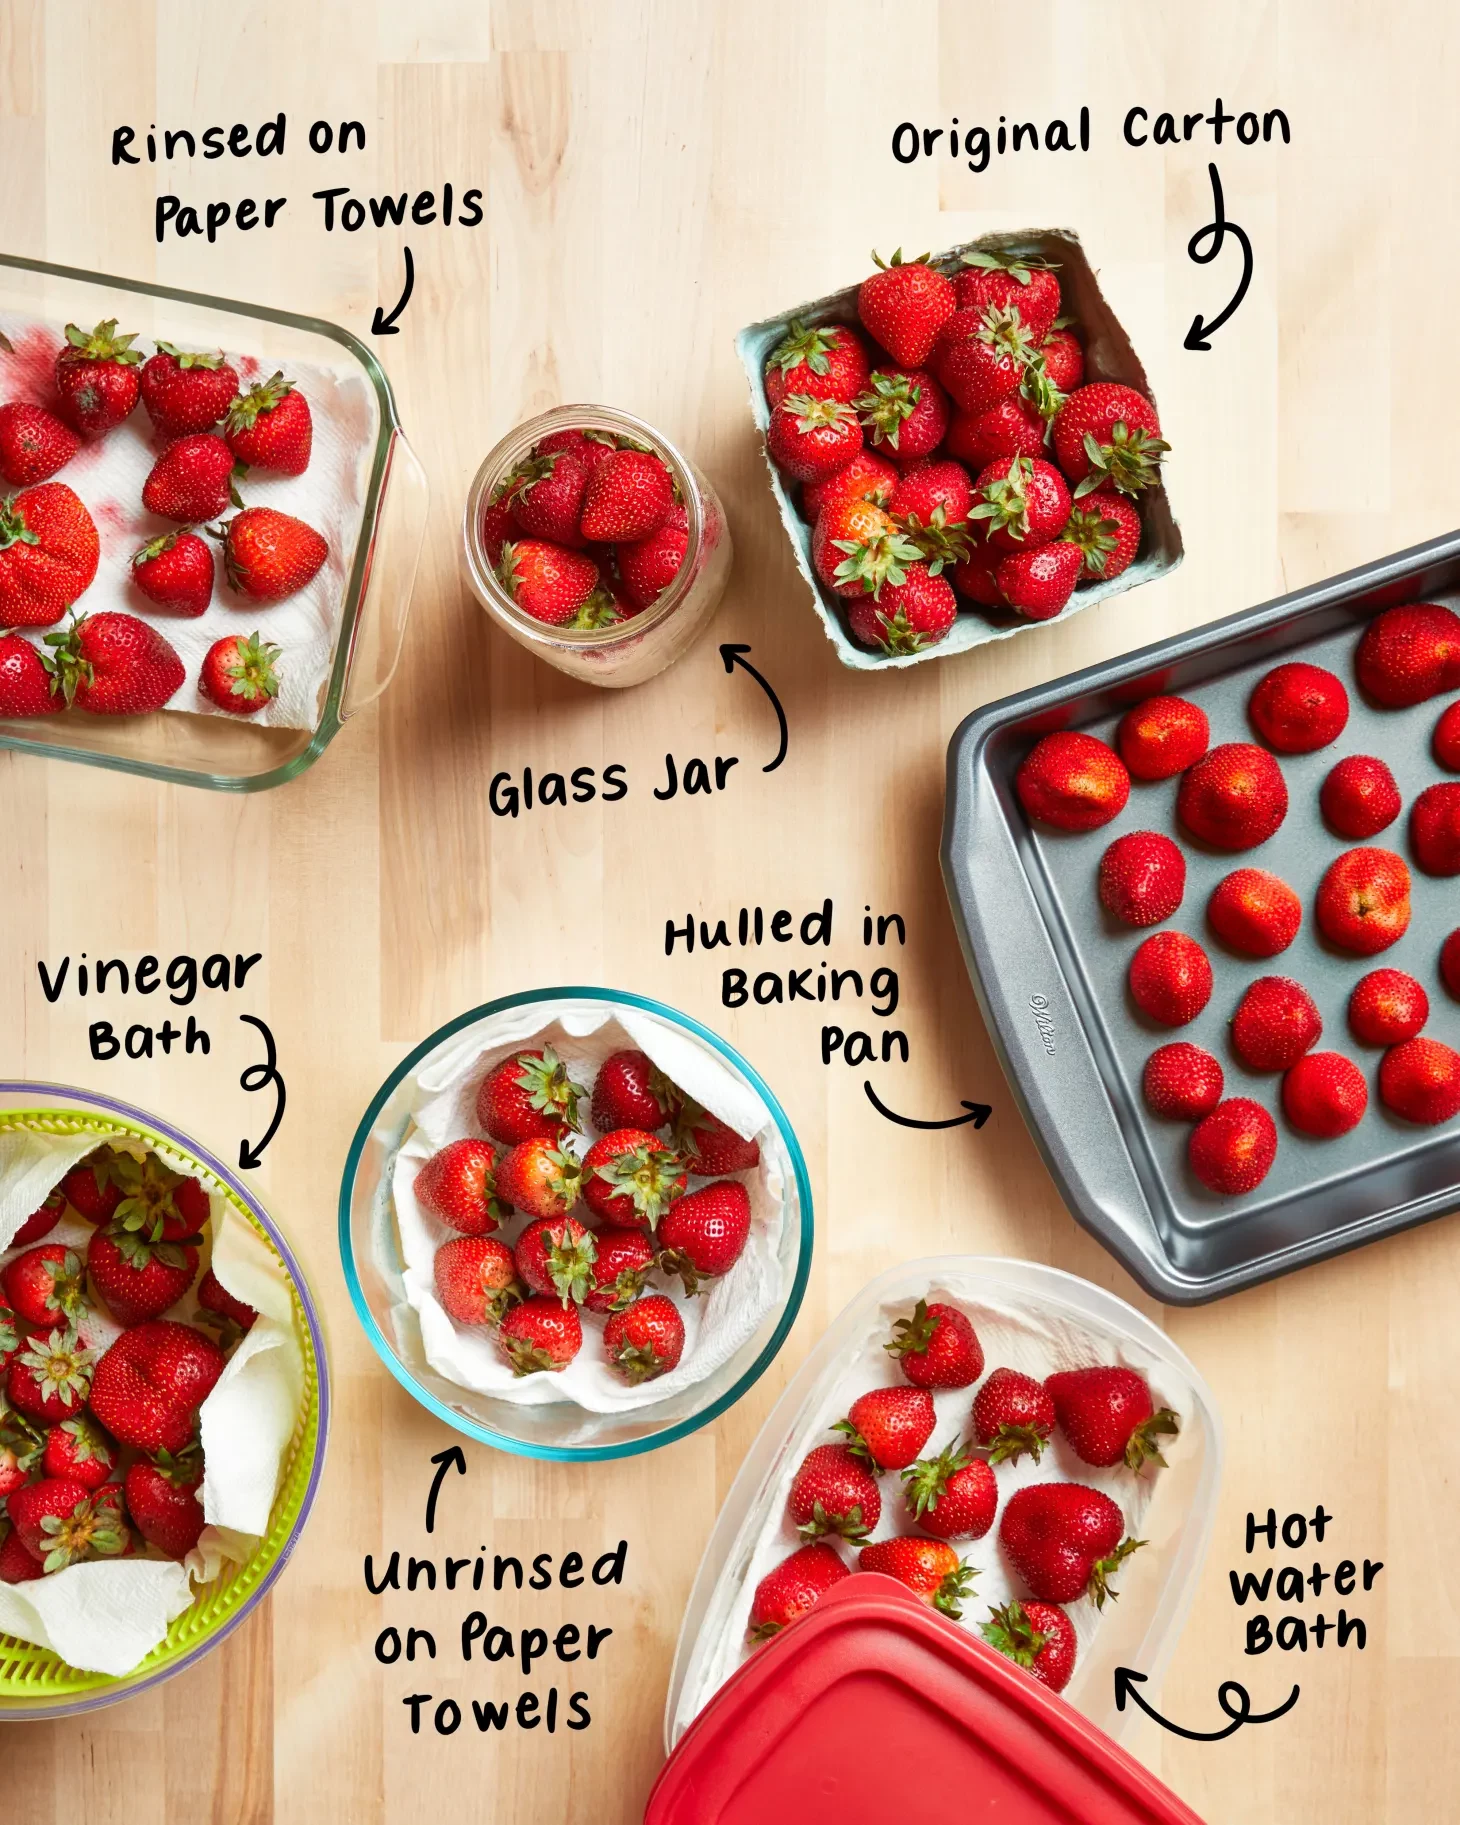 store strawberries in fridge or not